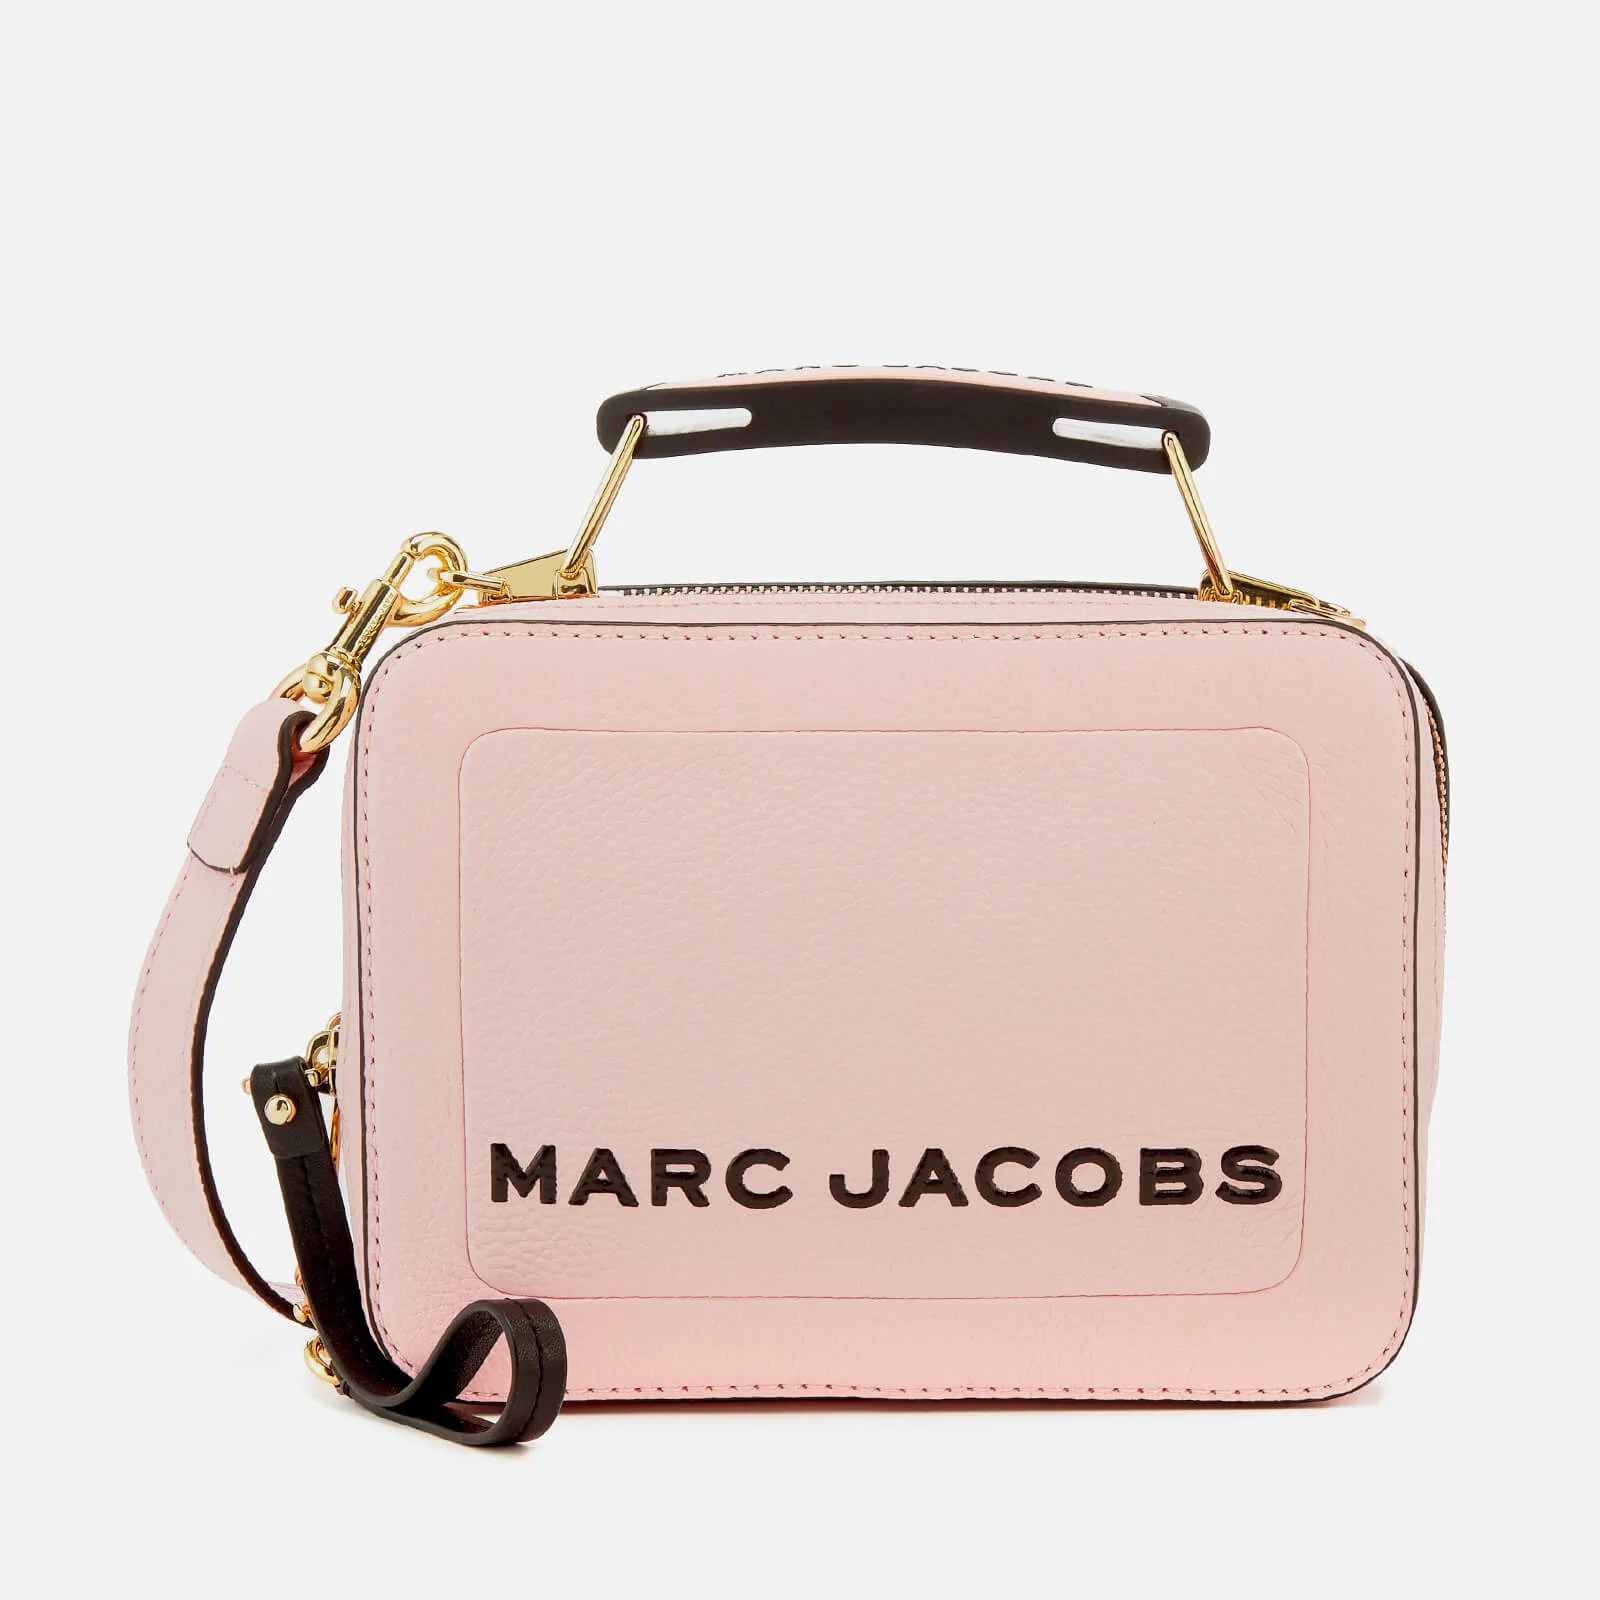 Marc Jacobs Women's The Box 20 Cross Body Bag - Blush Image 1